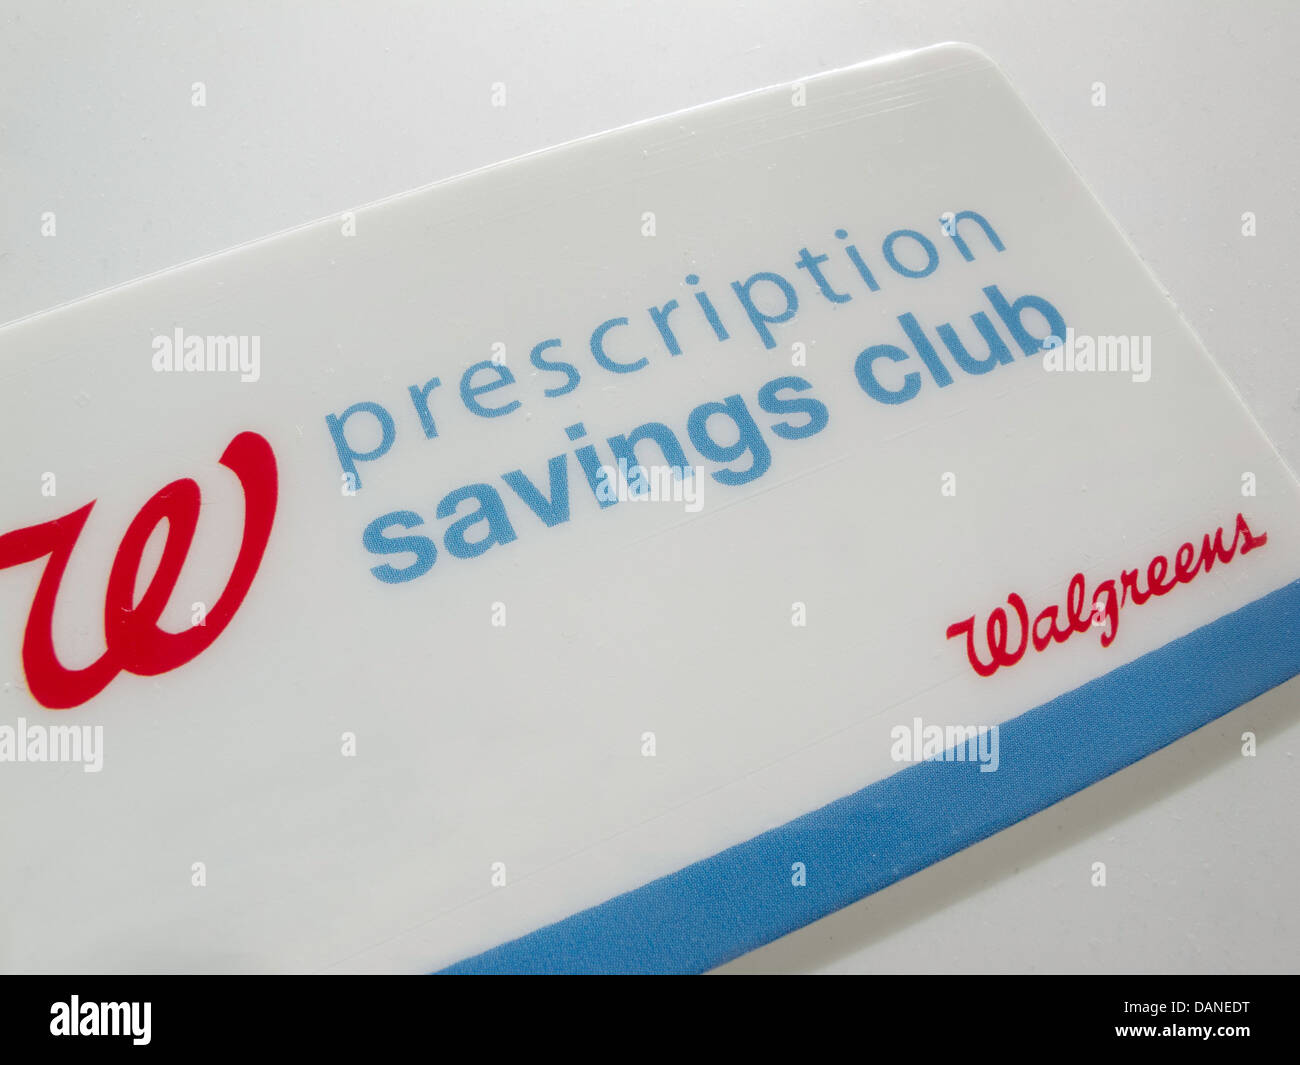 Walgreens Drugstores Prescription Savings Club Card, Loyal Customer Reward Program Still Life, NYC, USA Stock Photo